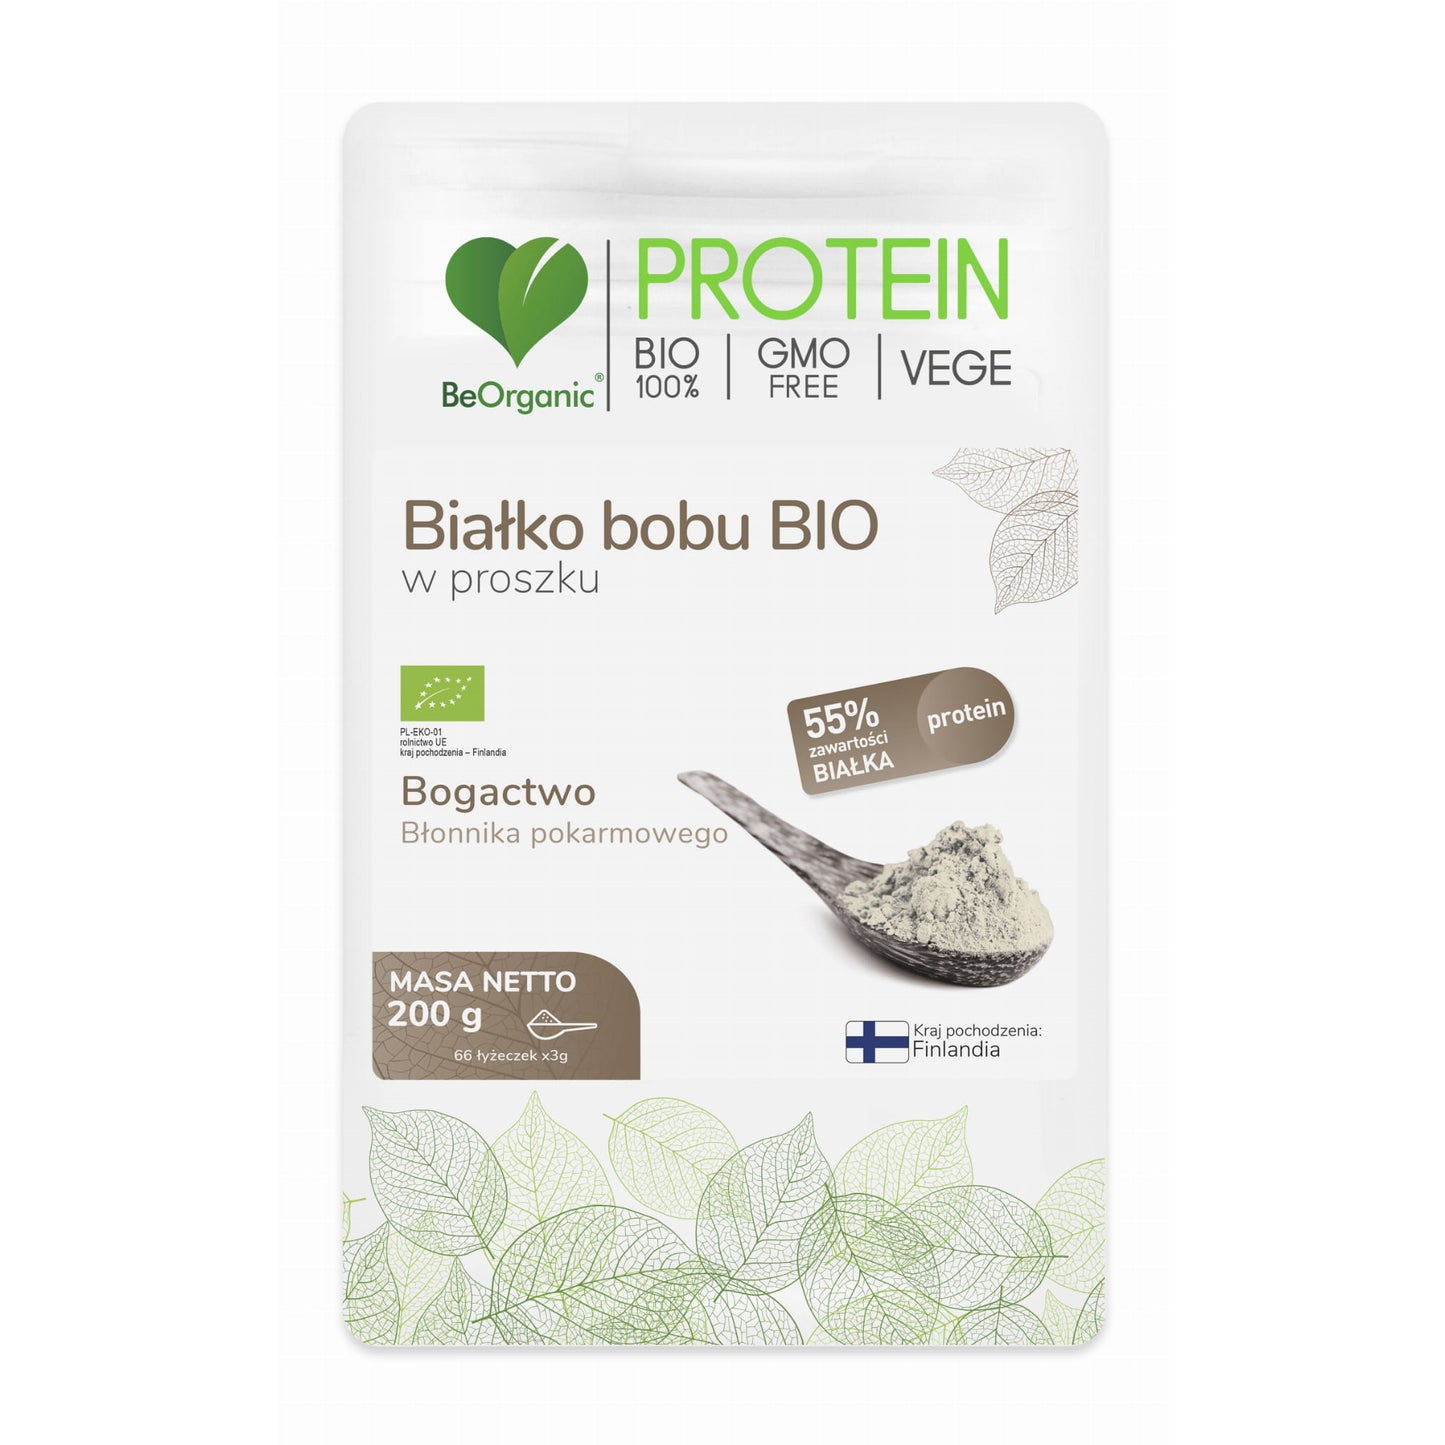 BeOrganic Broad Bean Protein Powder, 200g